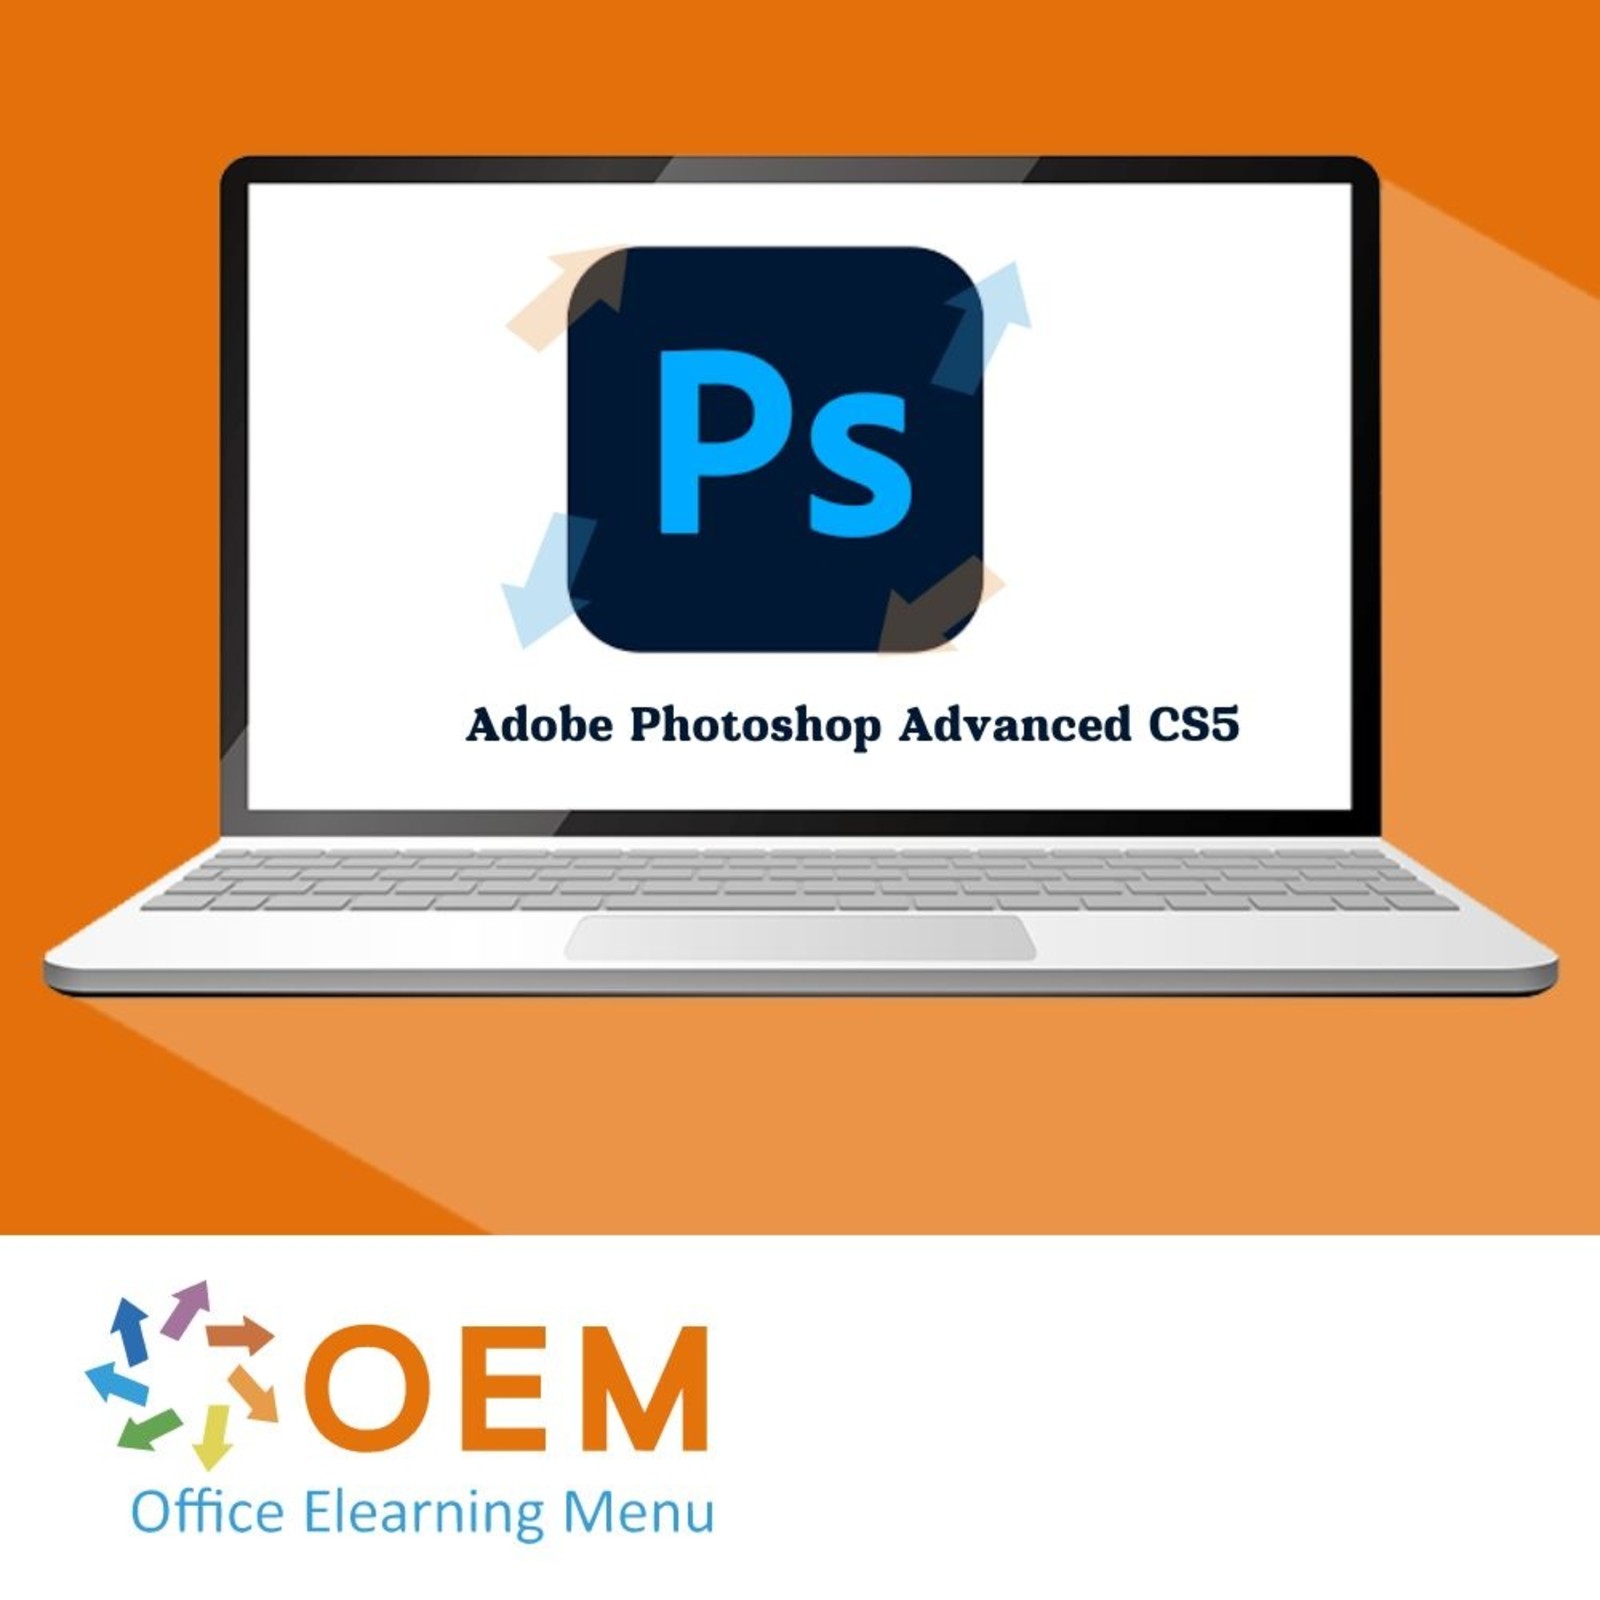 Adobe Photoshop Adobe Photoshop Advanced Course CS5 E-Learning